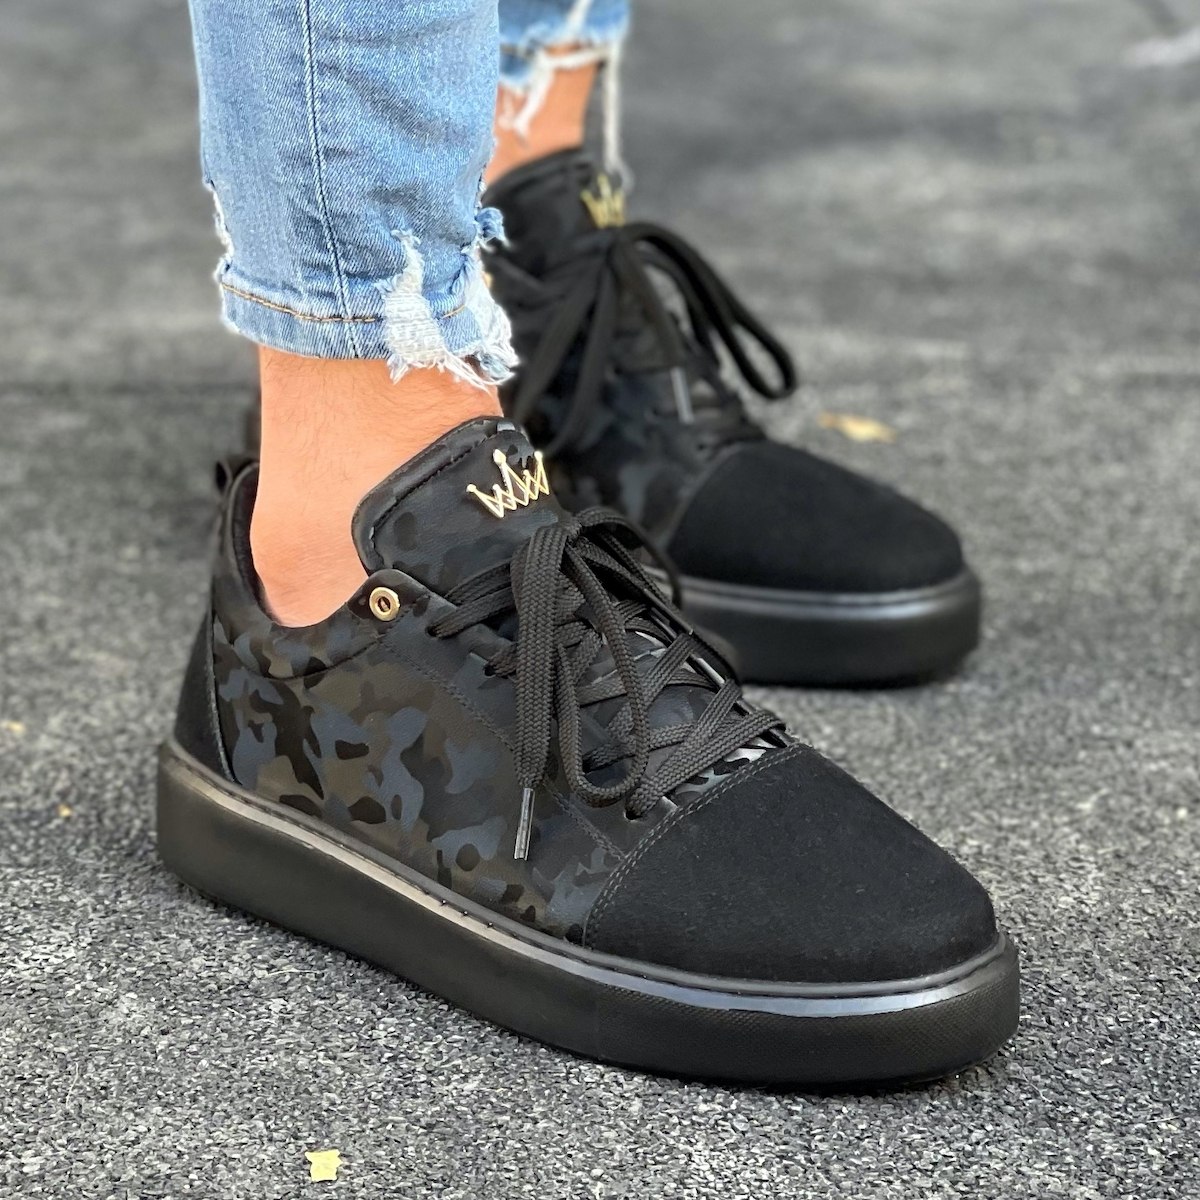 Herren Chunky Sneakers Schuhe mit Krone in schwarz-camouflage - 1